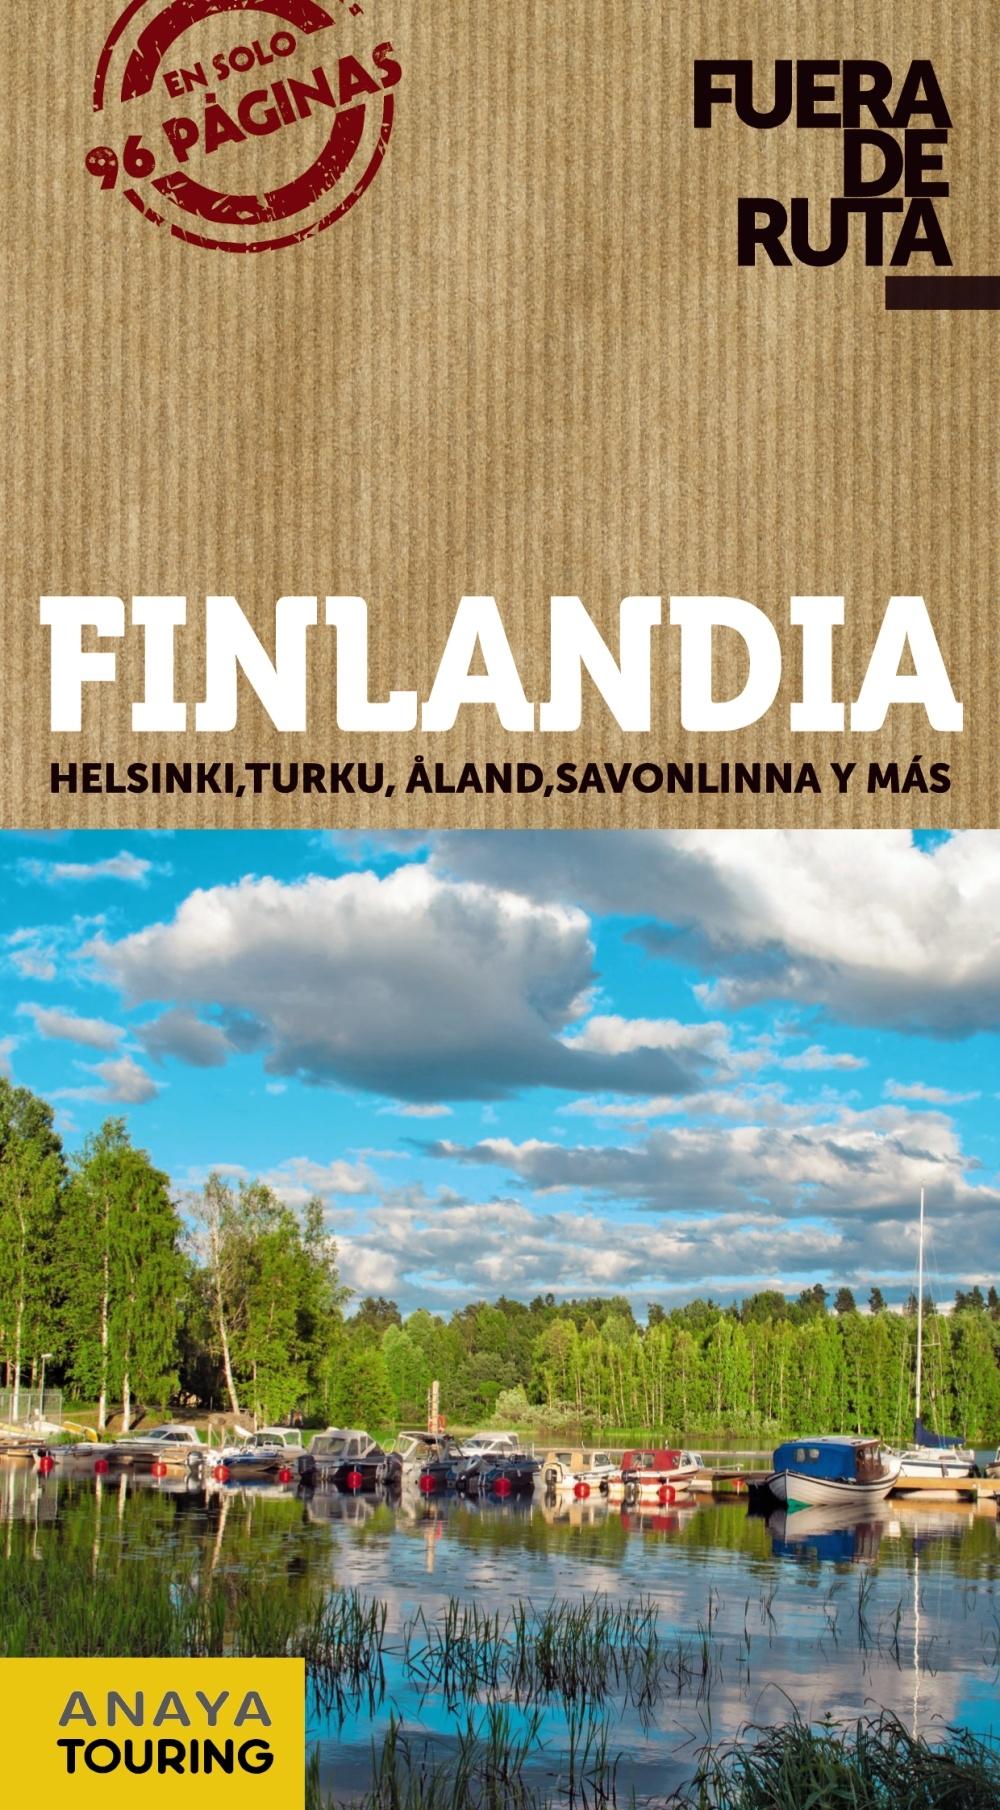 FINLANDIA  FUERA DE RUTA "HELSINKI, TURKU, ALAND, SAVOLINNA Y MAS"